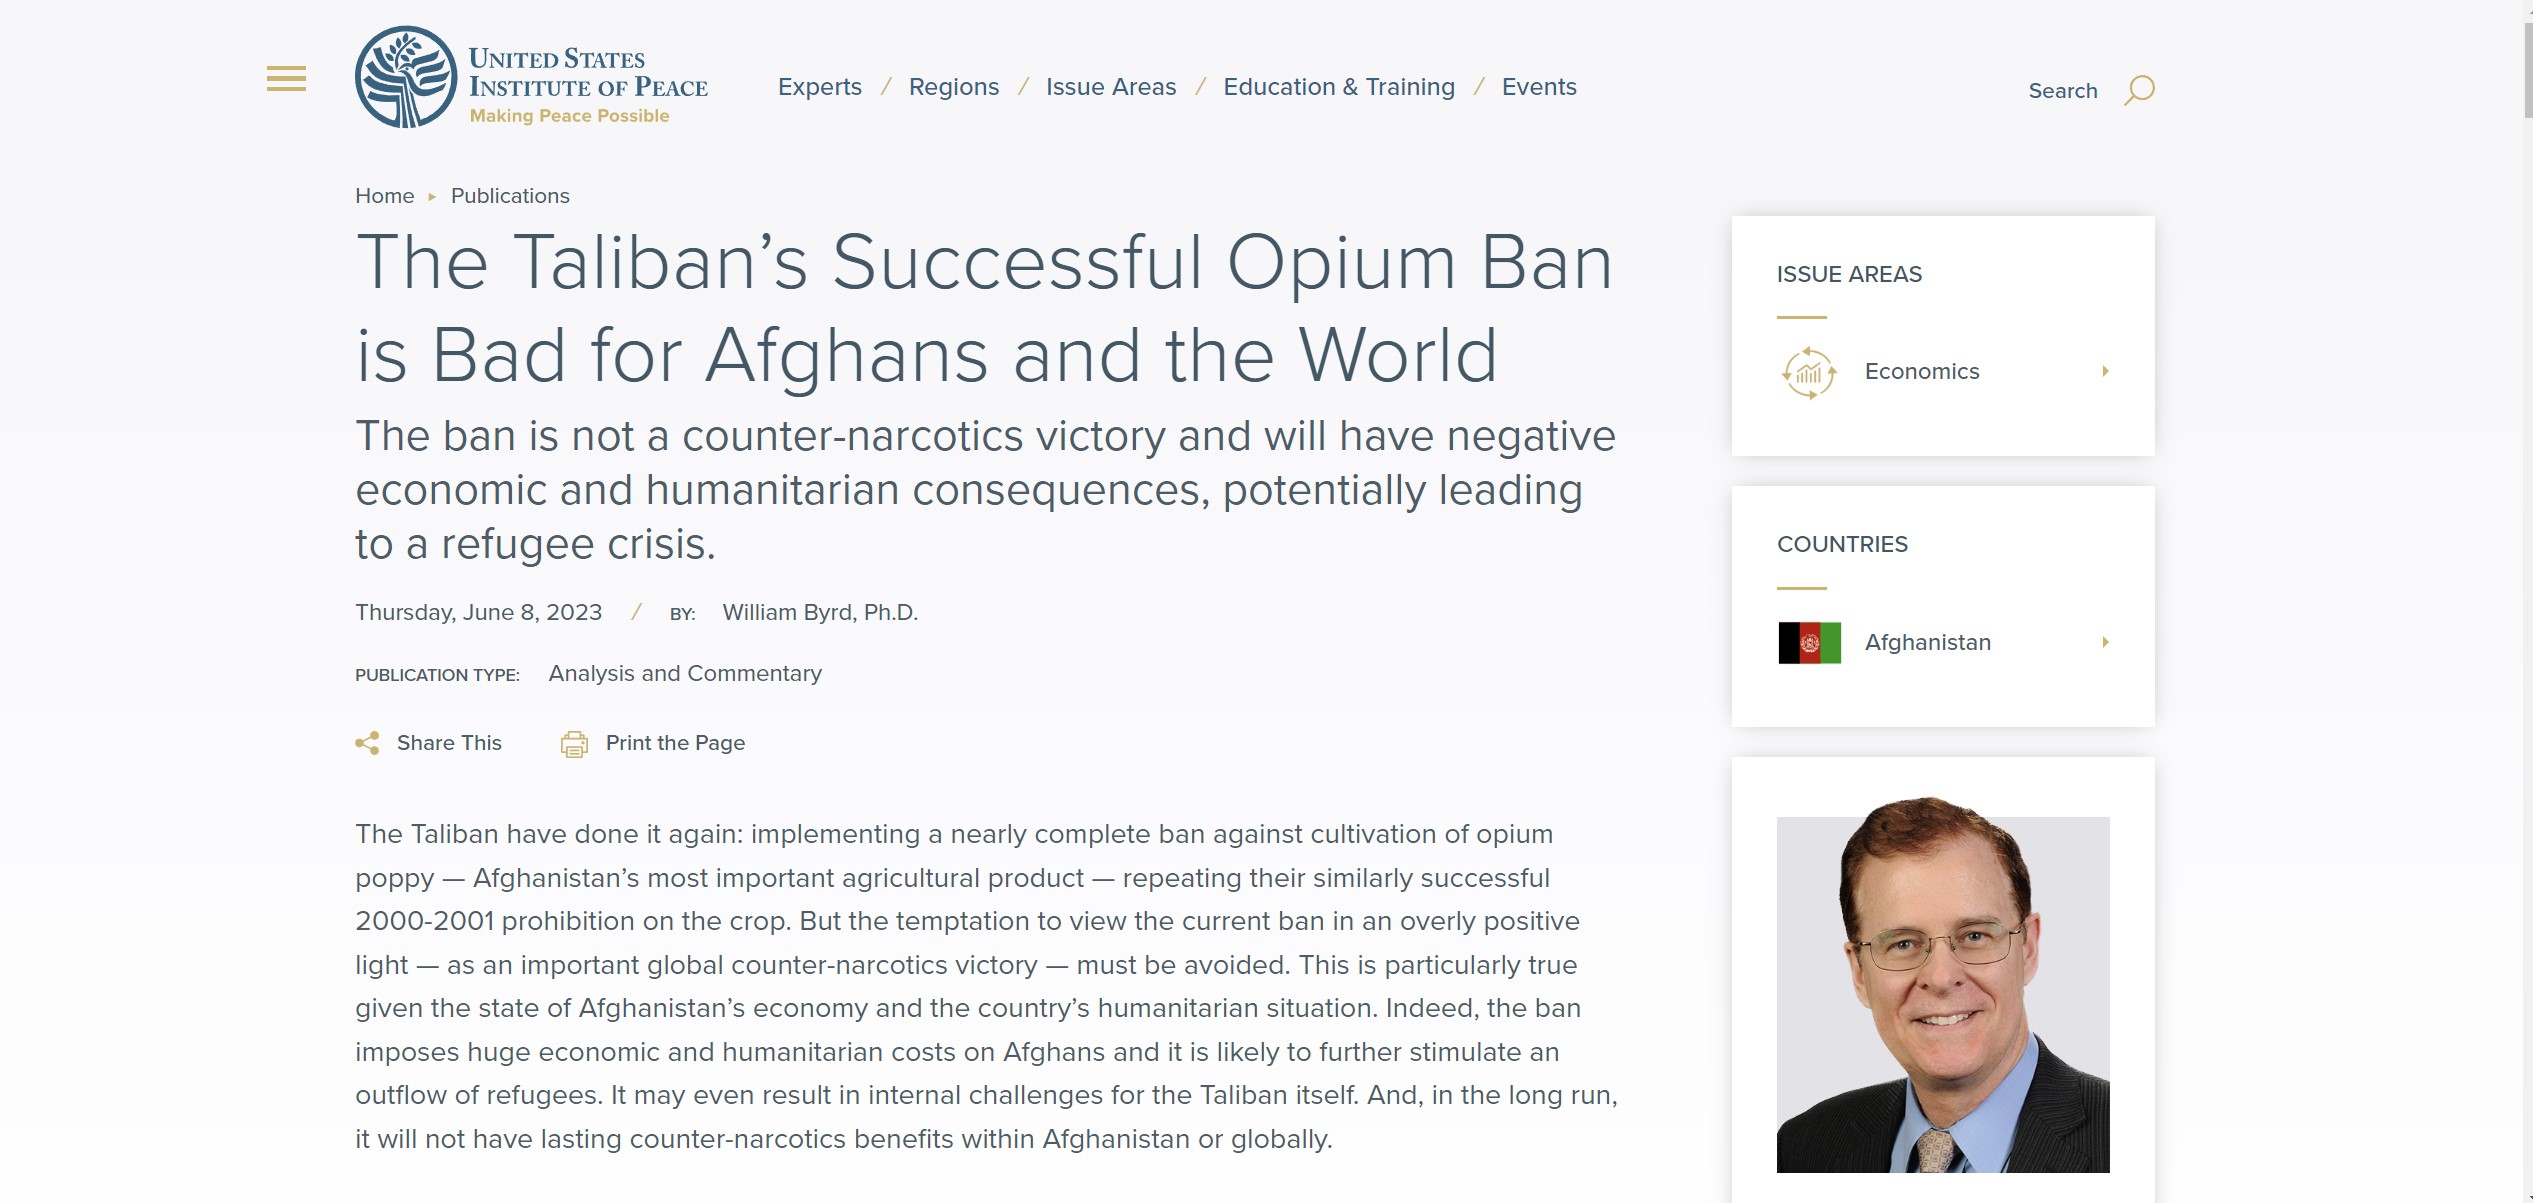 United State Institute of Peace: Η επιτυχής απαγόρευση του οπίου από τους Ταλιμπάν είναι κακή για τους Αφγανούς και τον κόσμο! Απώλεια 1 δις δολαριών – Προσφυγικές ροές προς Τουρκία και Ευρώπη